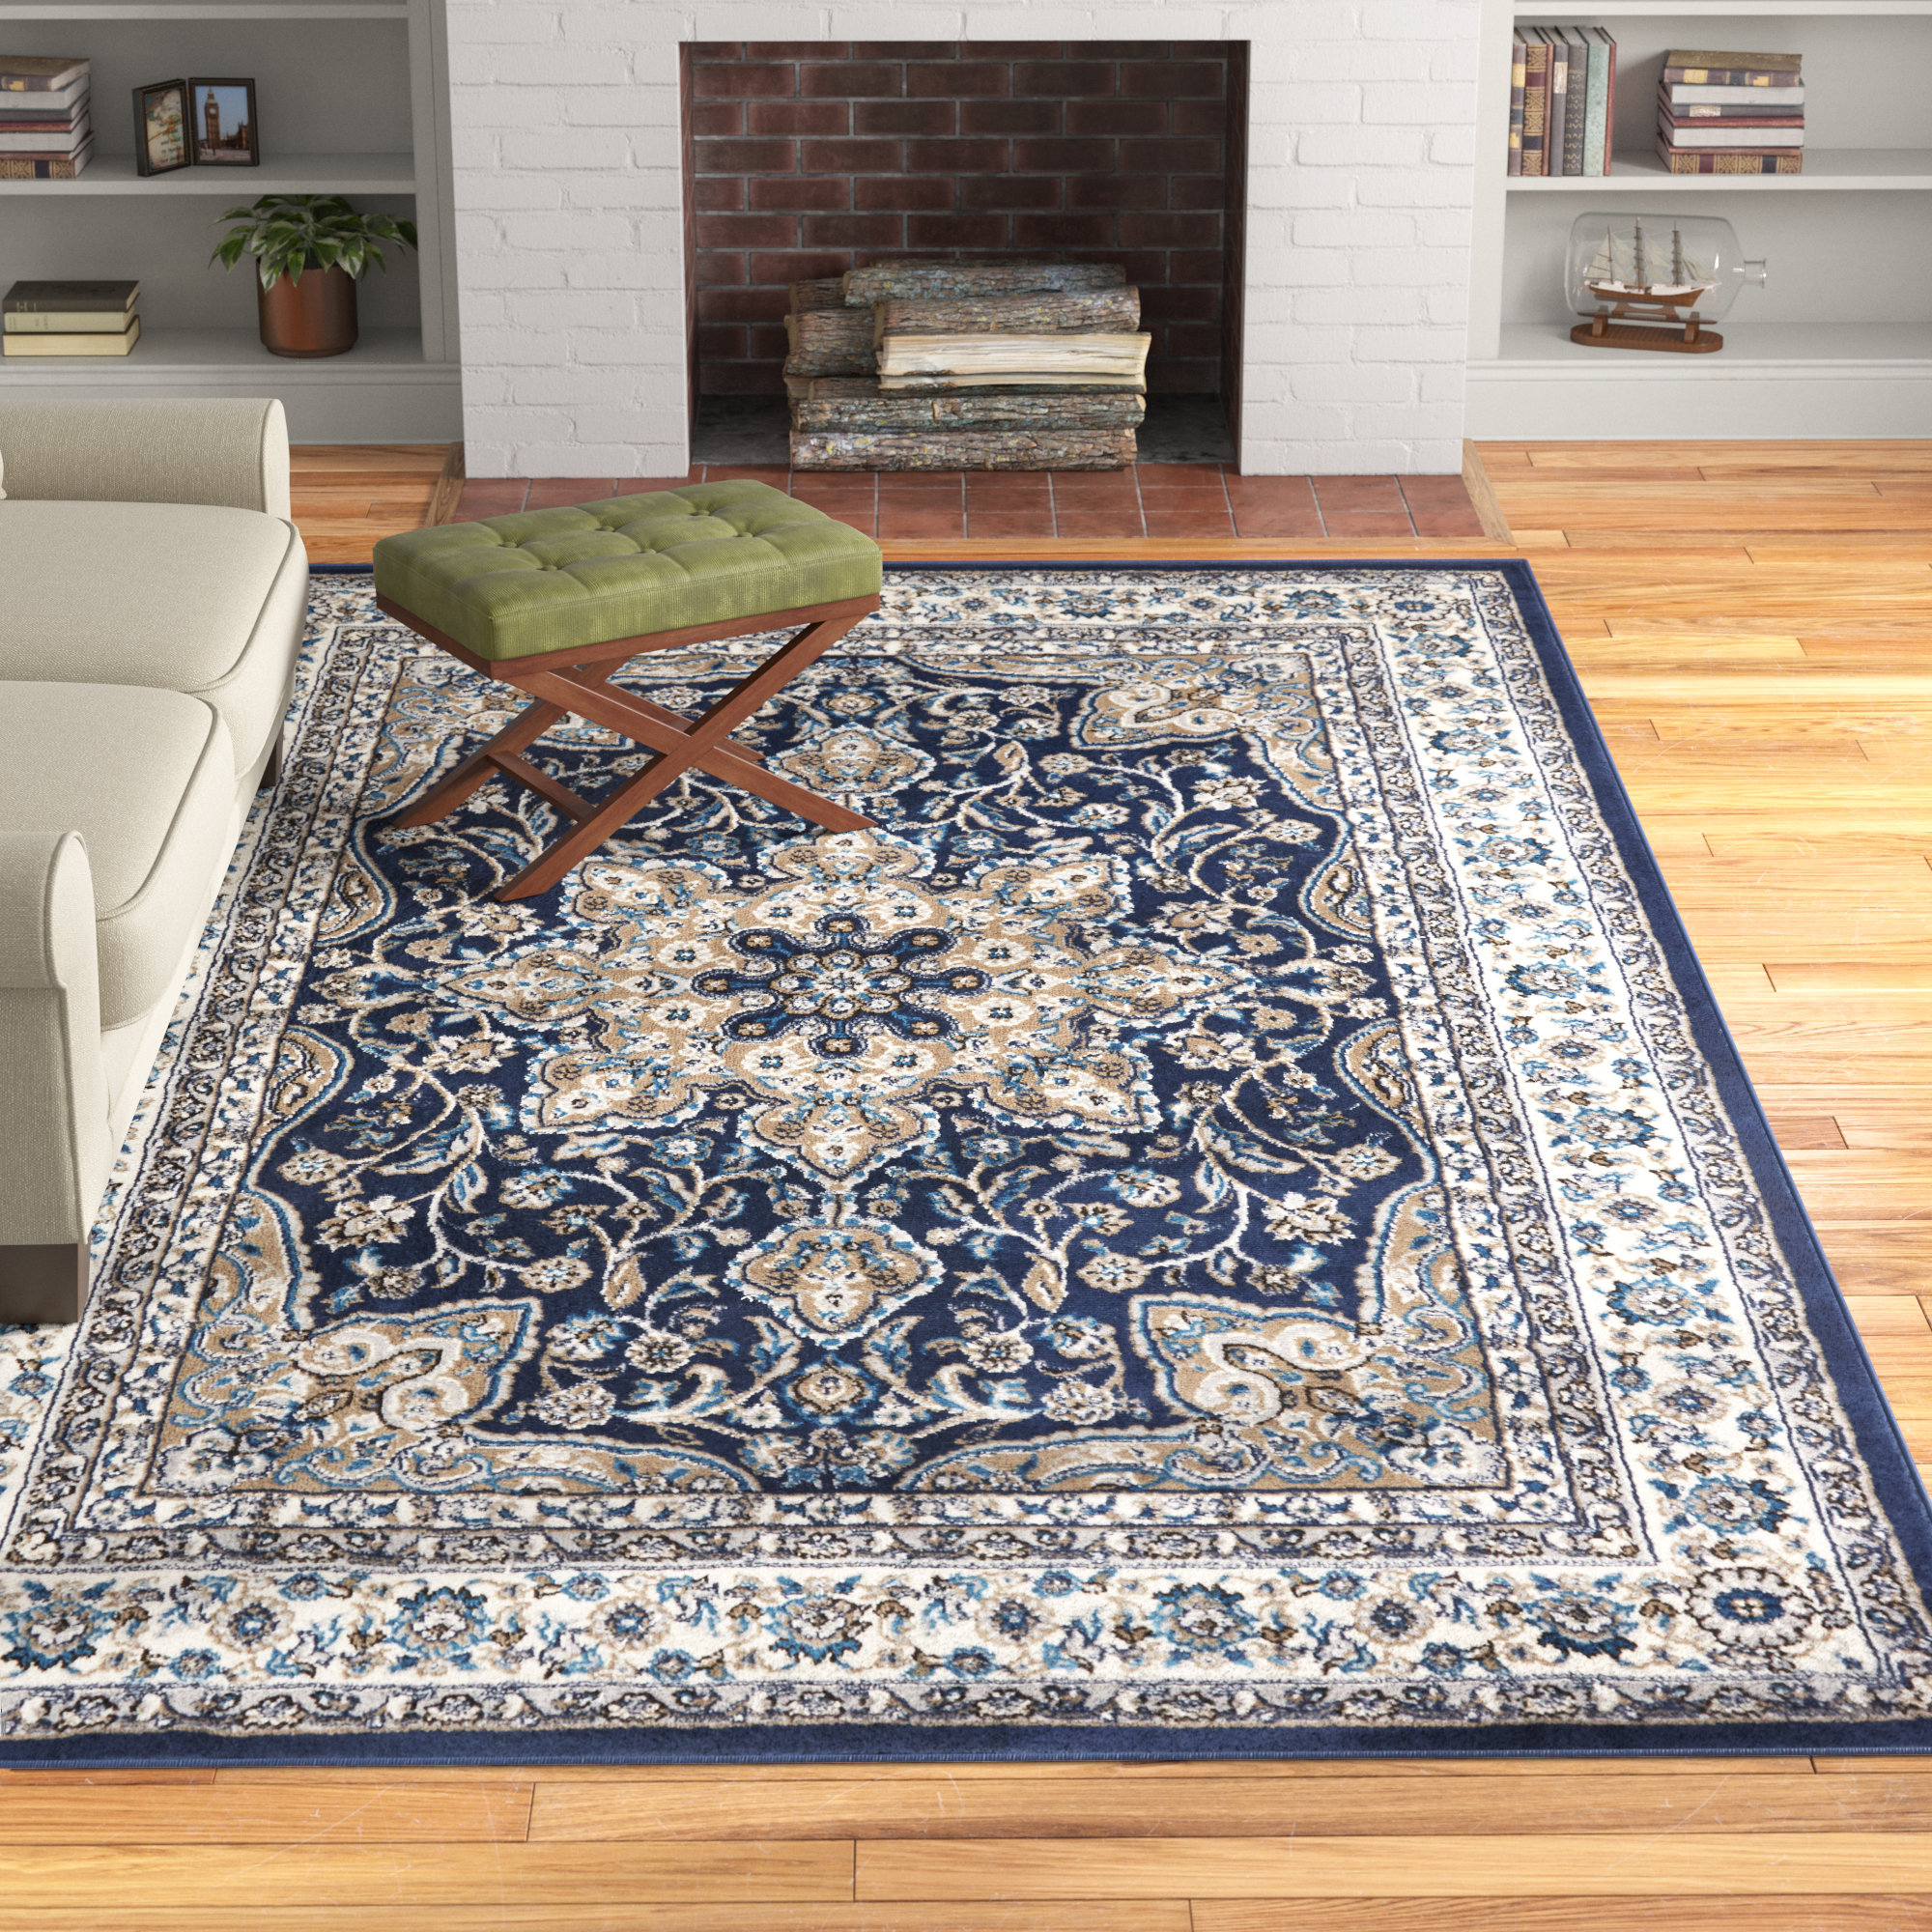 Luxury Round Carpet Living Room Blue Gold Anti-Slip Carpet